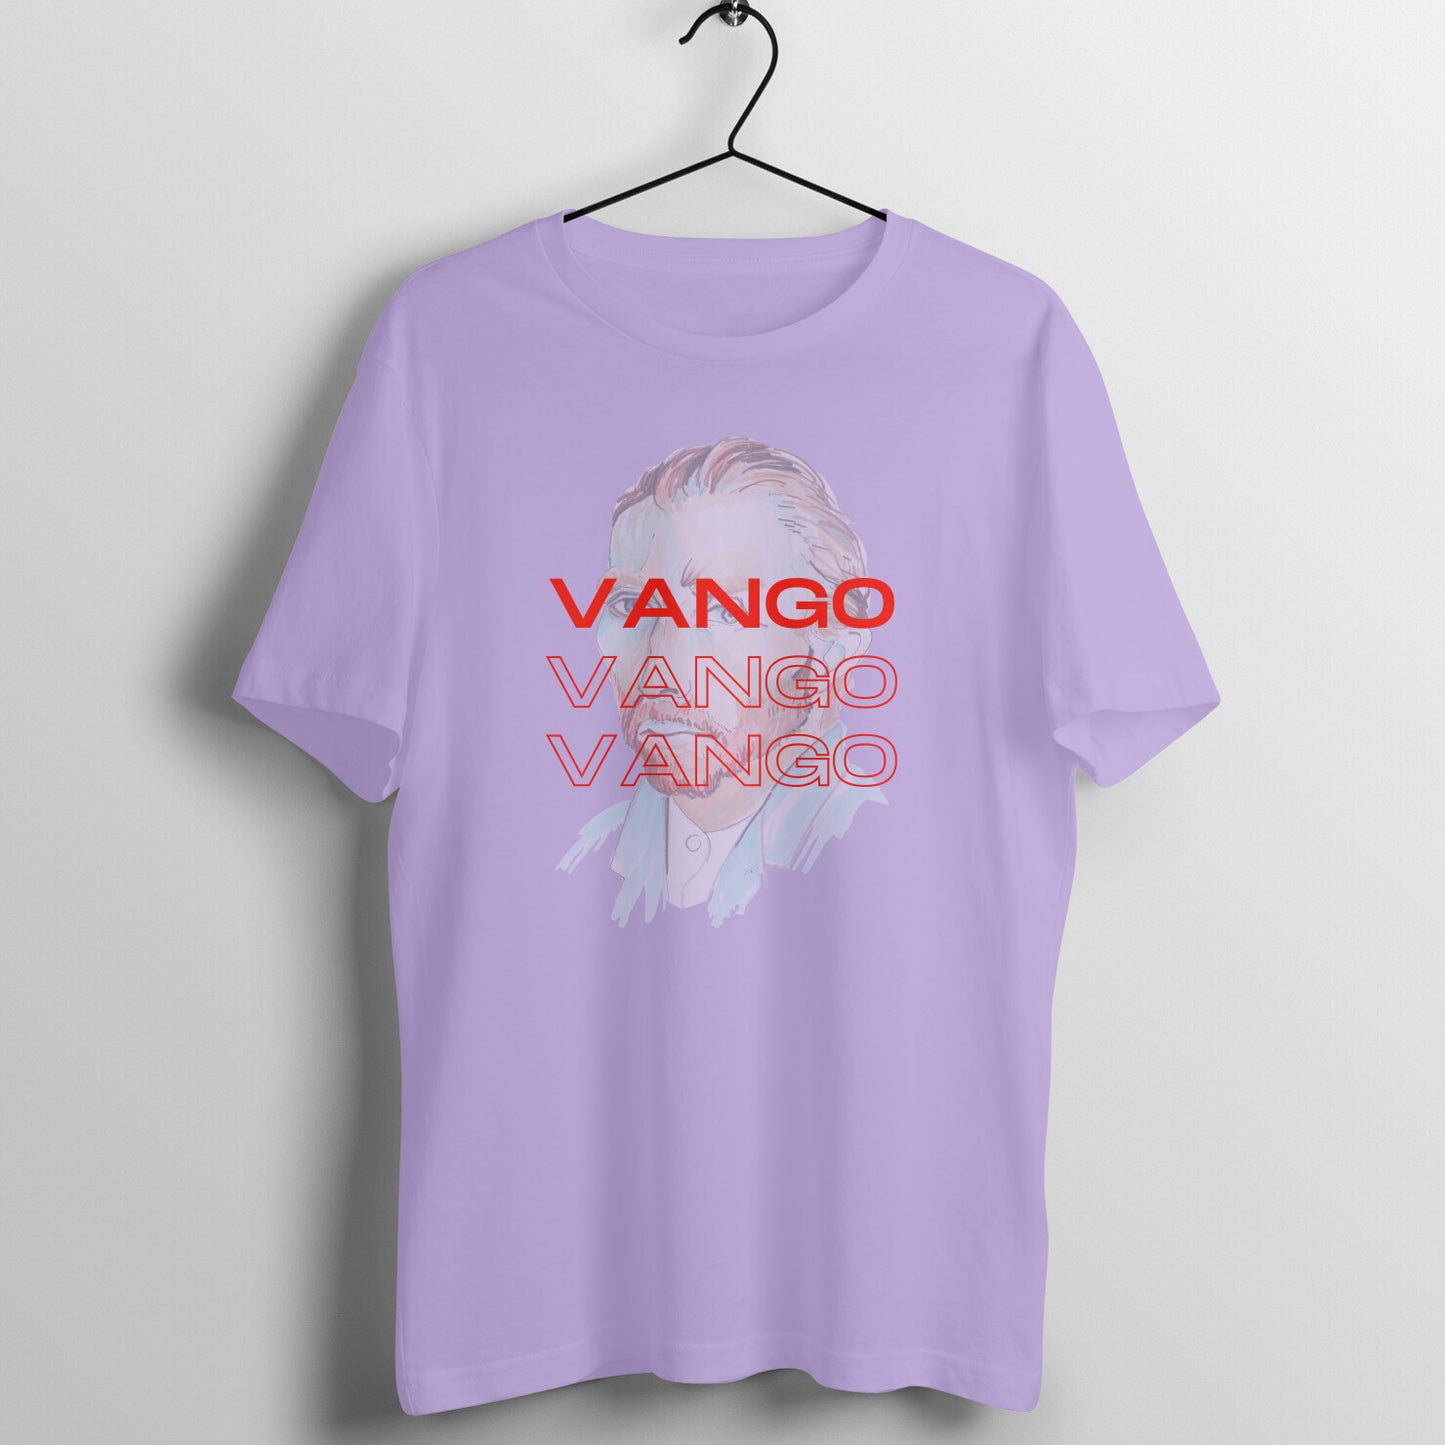 Bilkool Vango Cotton Half Sleeve T-Shirt